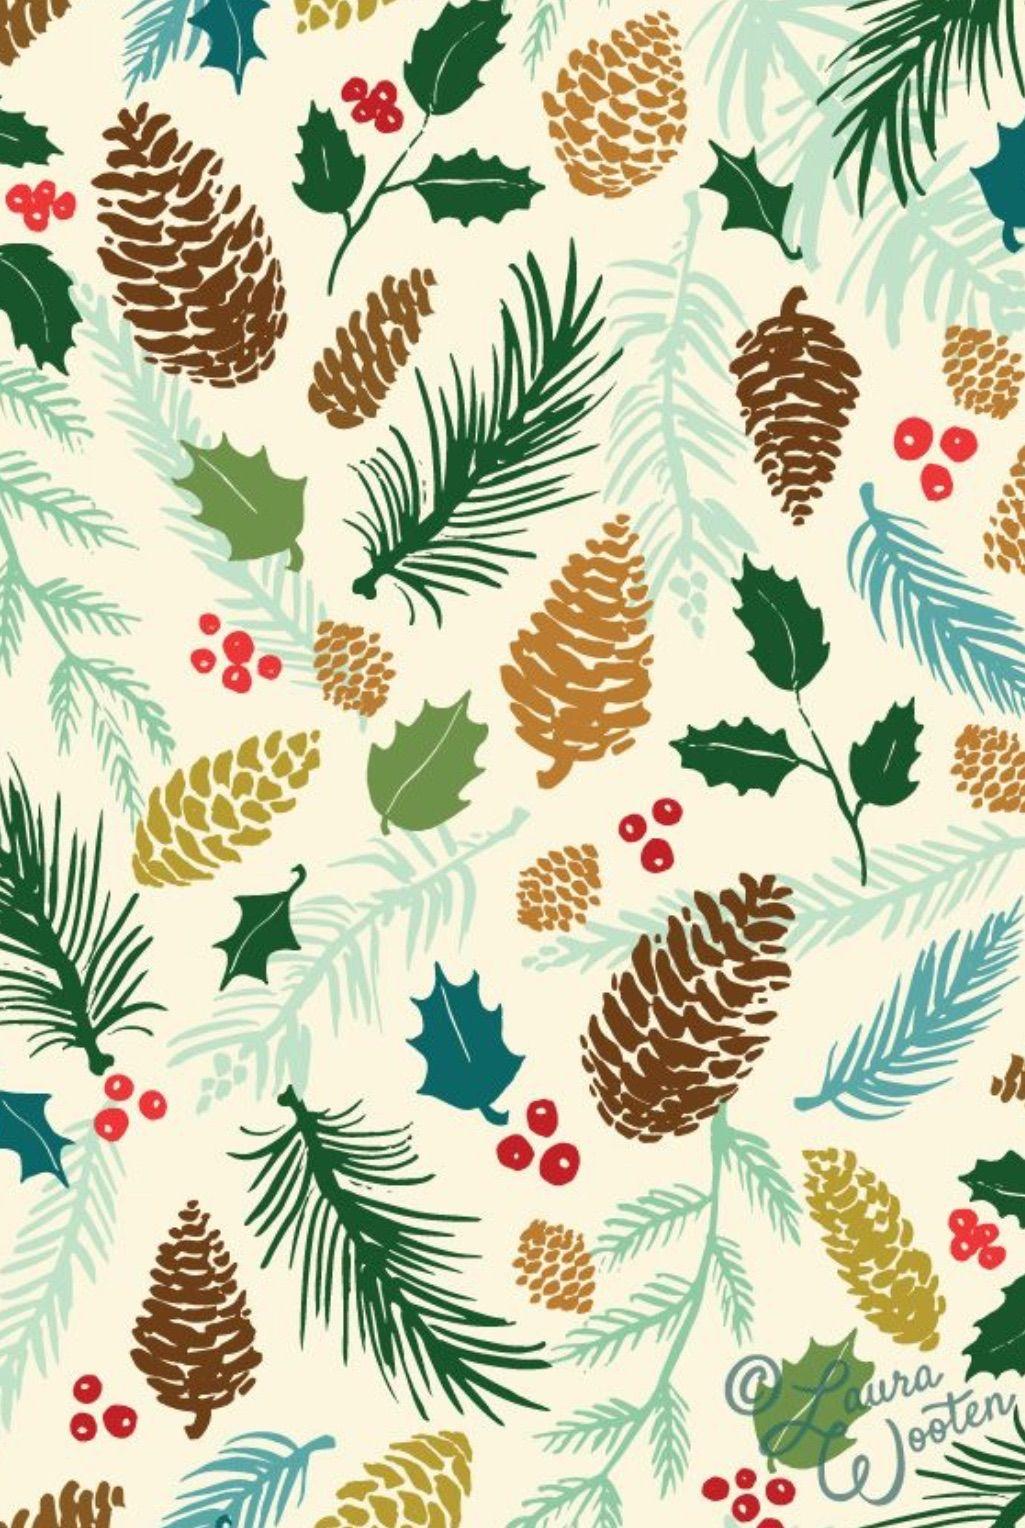 Free Christmas Wallpaper! Love how it has Pine Cones, Berries